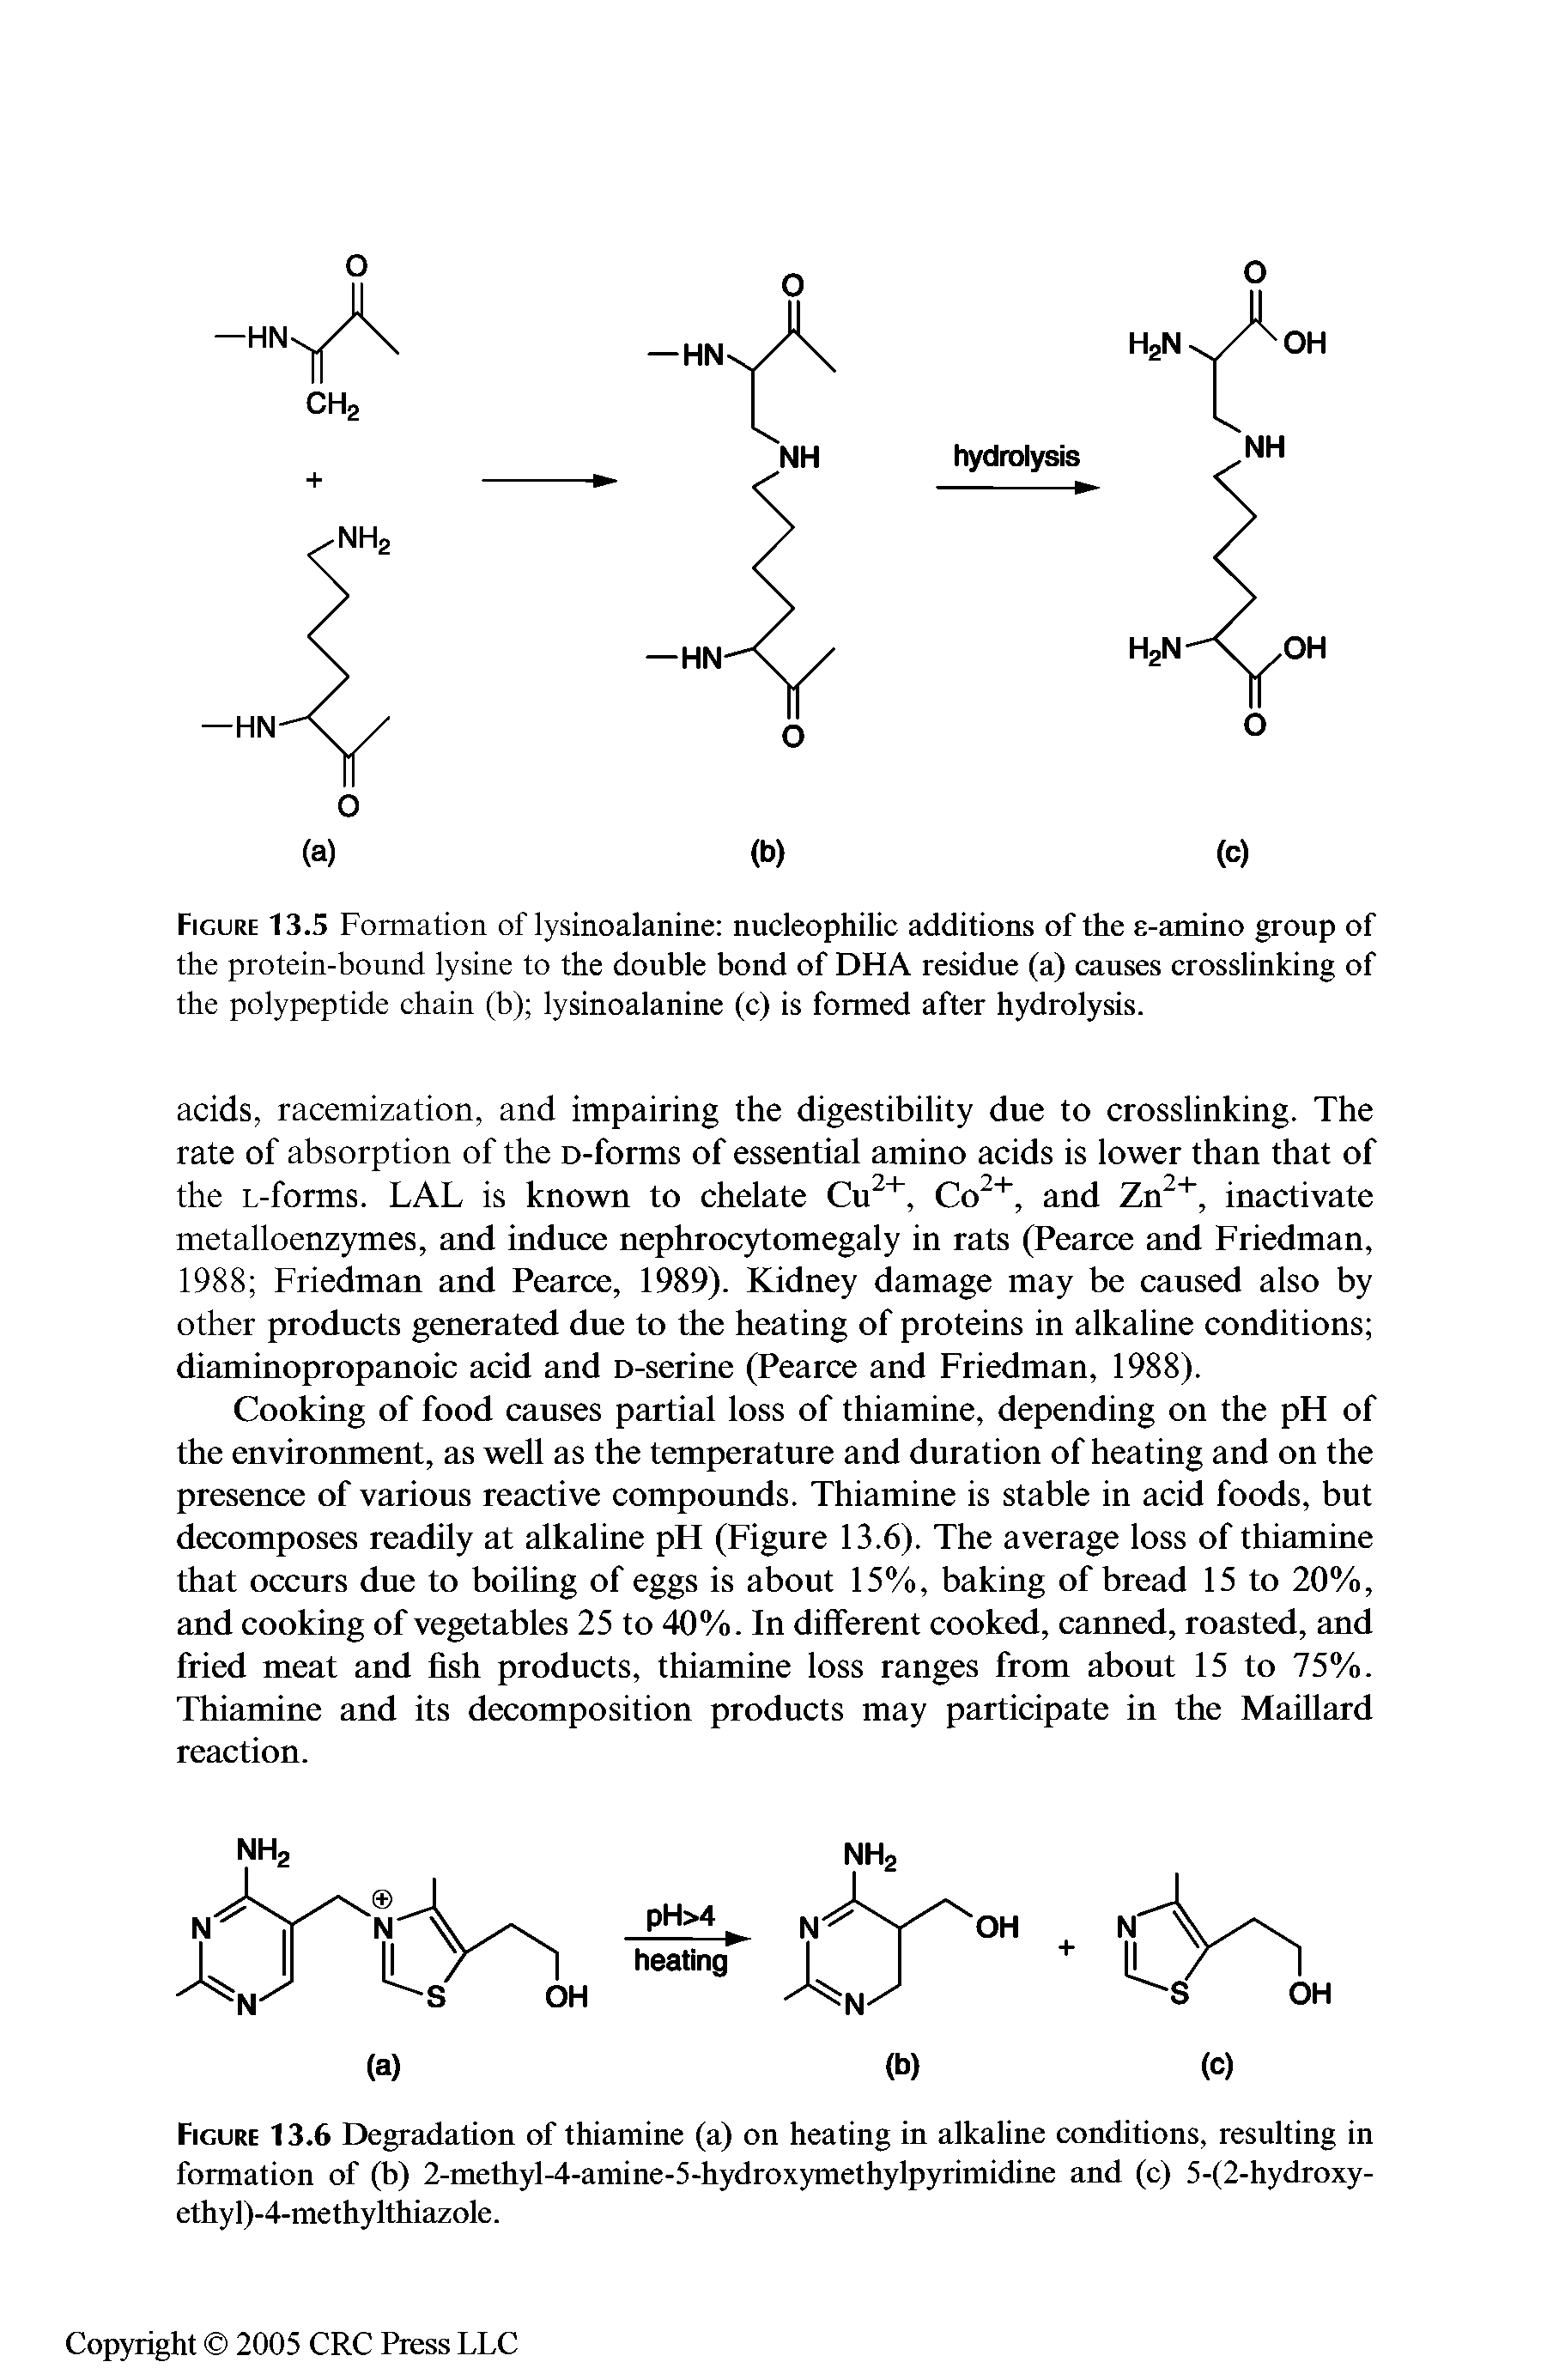 Figure 13.6 Degradation of thiamine (a) on heating in alkaline conditions, resulting in formation of (b) 2-methyl-4-amine-5-hydroxymethylpyrimidine and (c) 5-(2-hydroxy-ethyl)-4-methylthiazole.